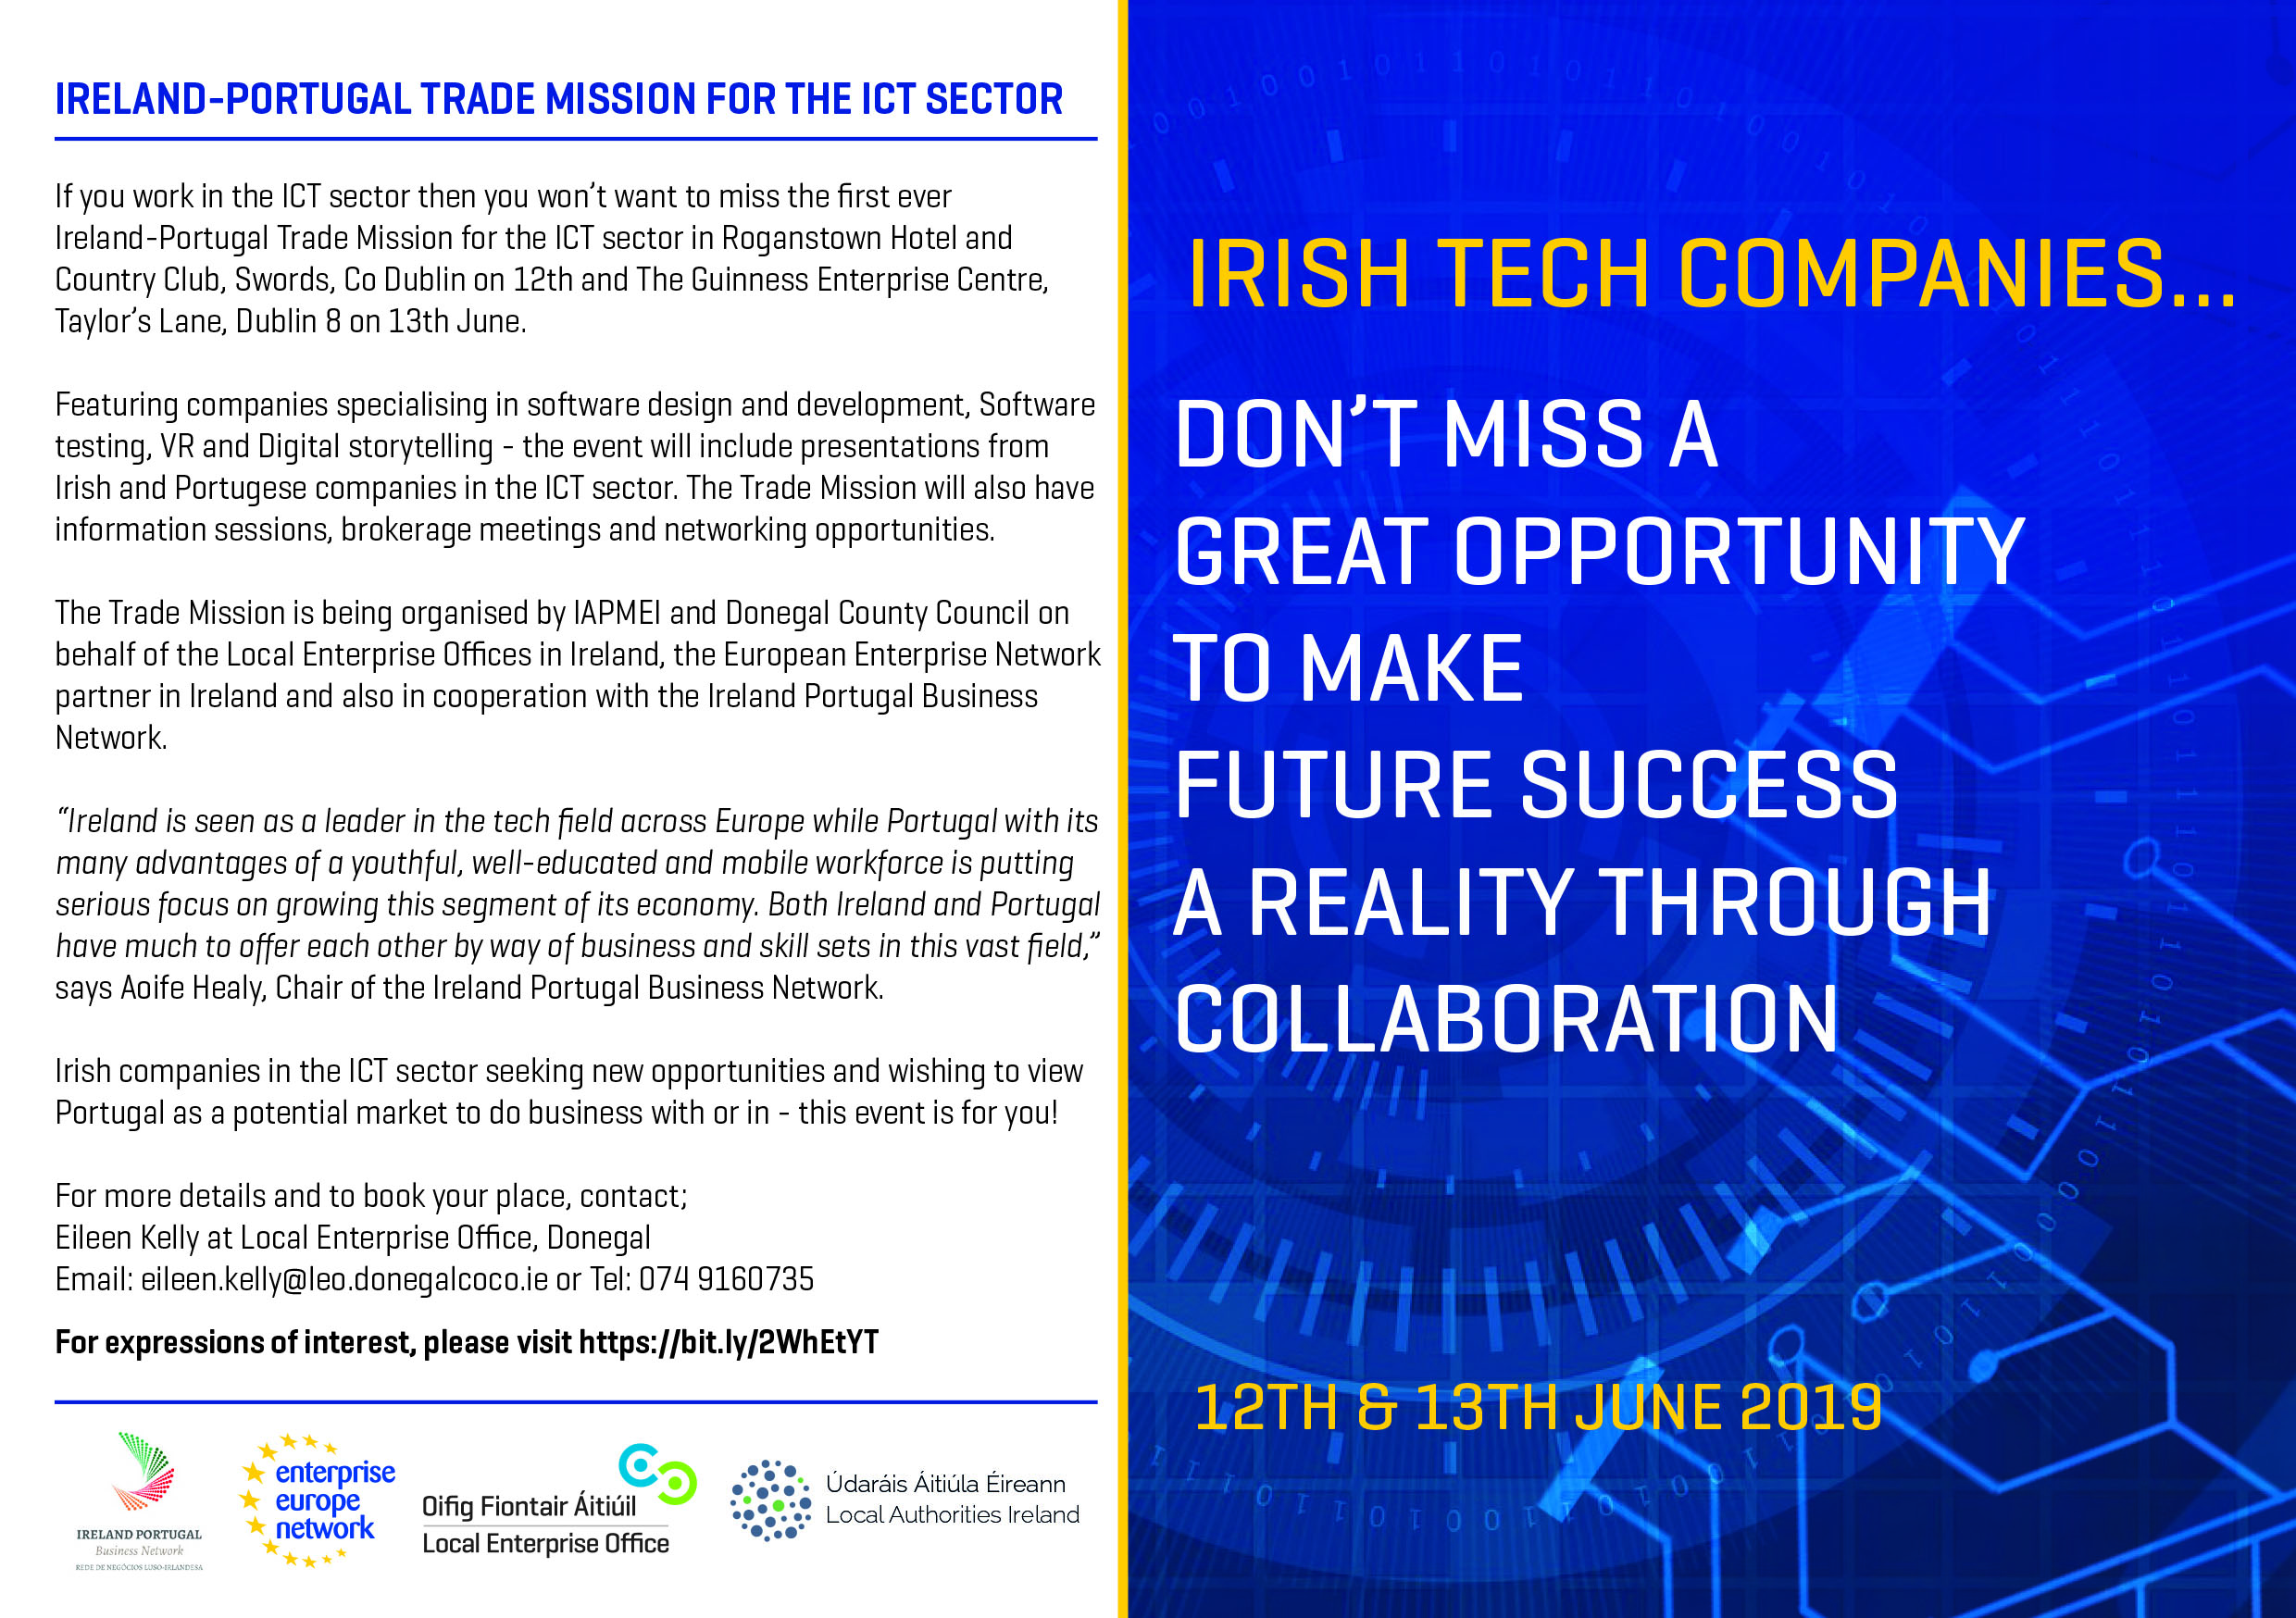 Ireland Portugal ICT Company Mission 12th & 13th June